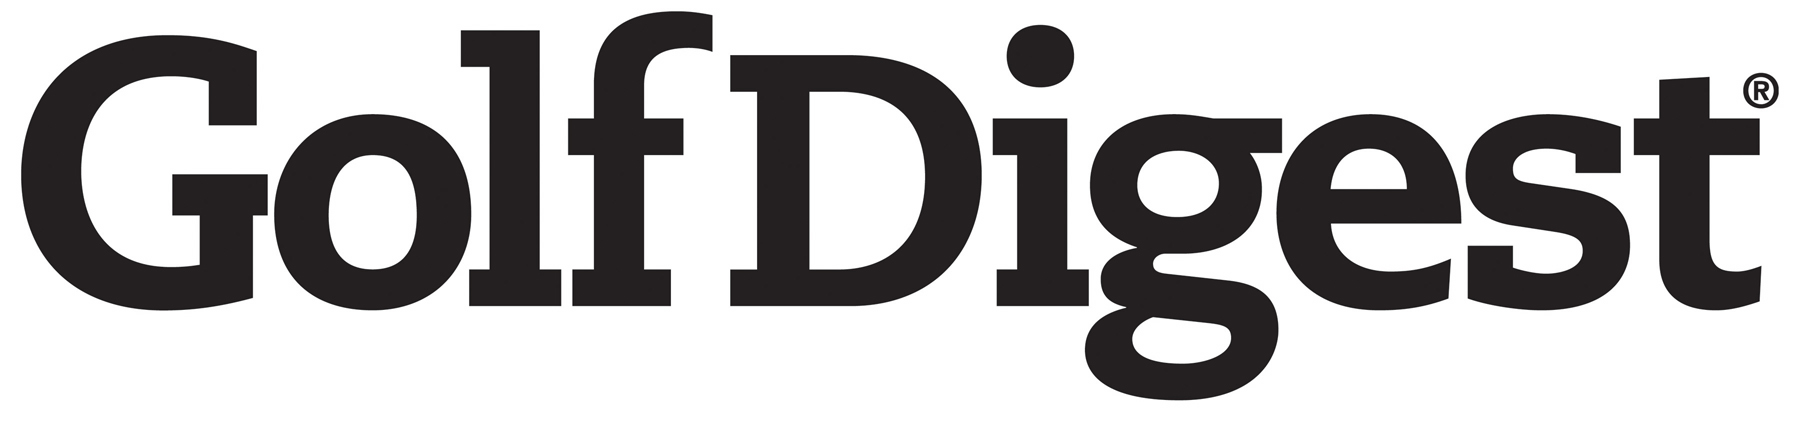 DGEST Logo photo - 1